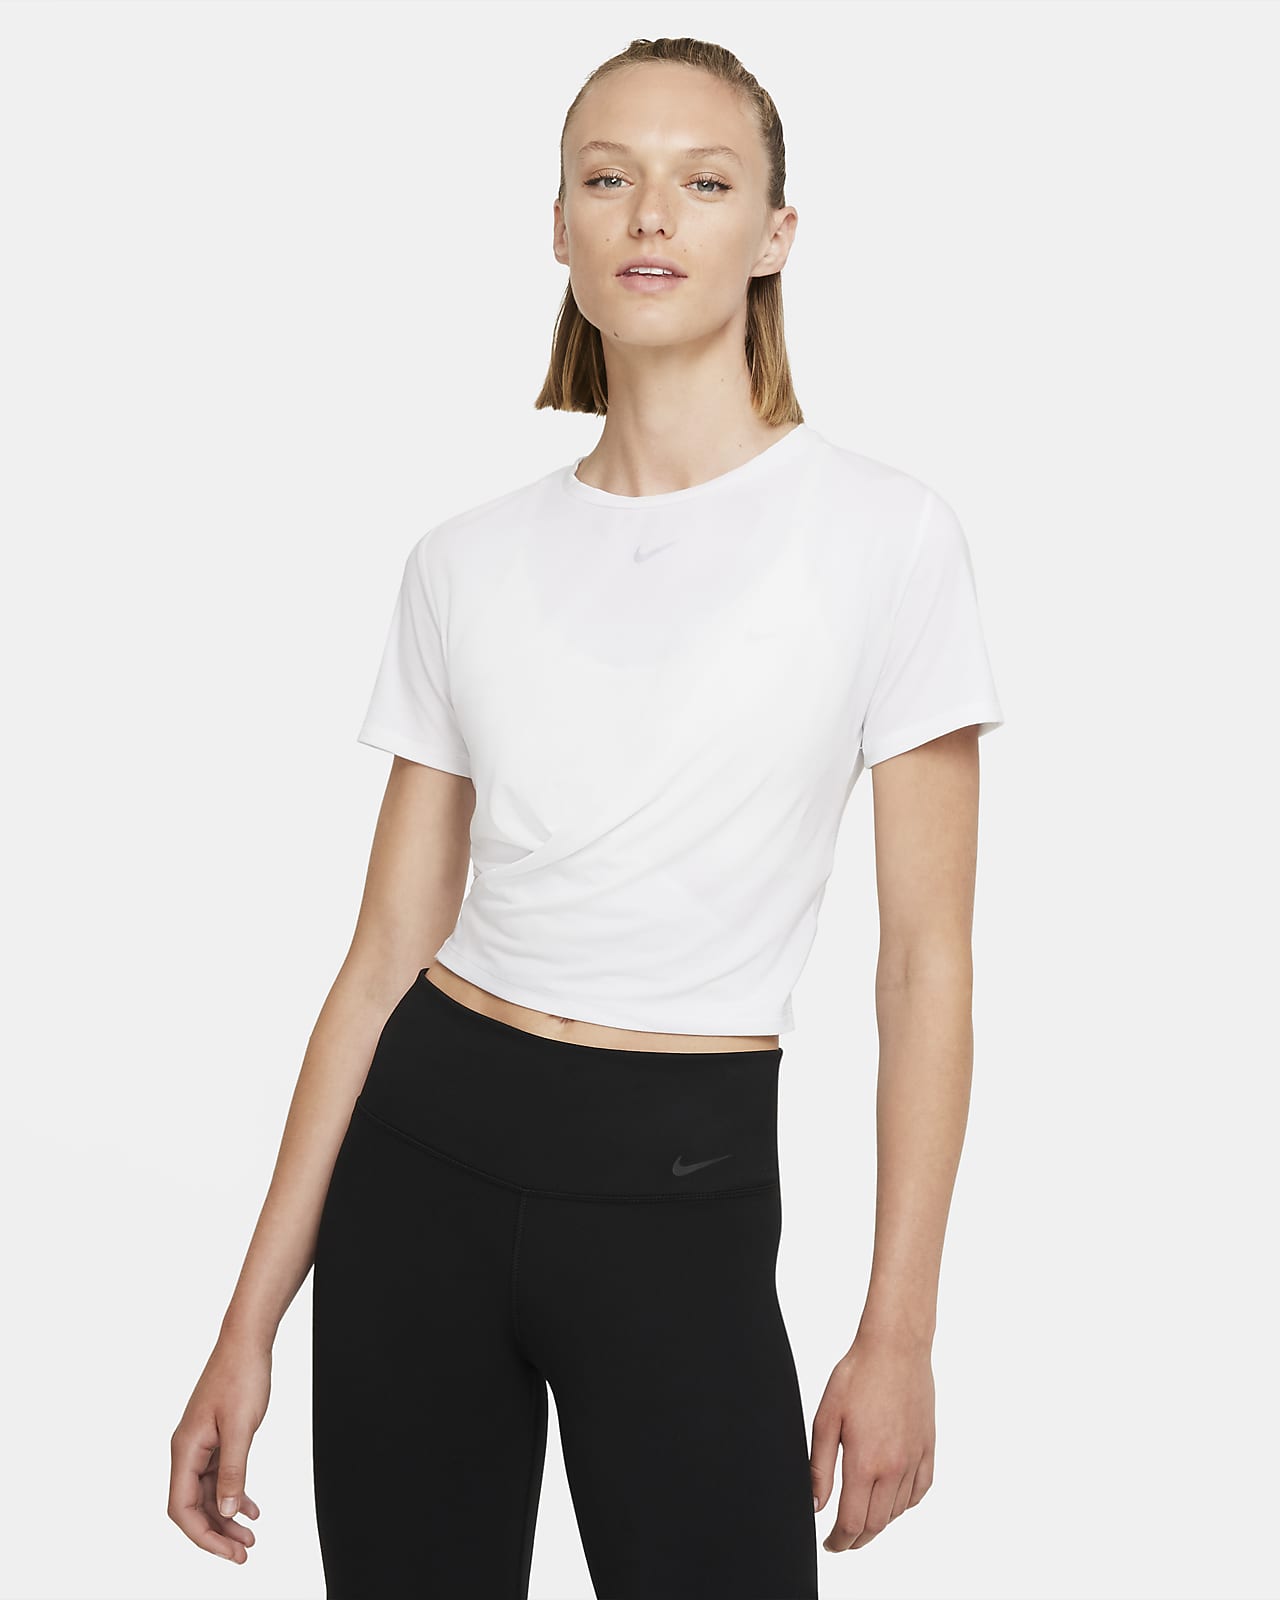 Nike Yoga Dri-Fit Luxe Crop Top Black White